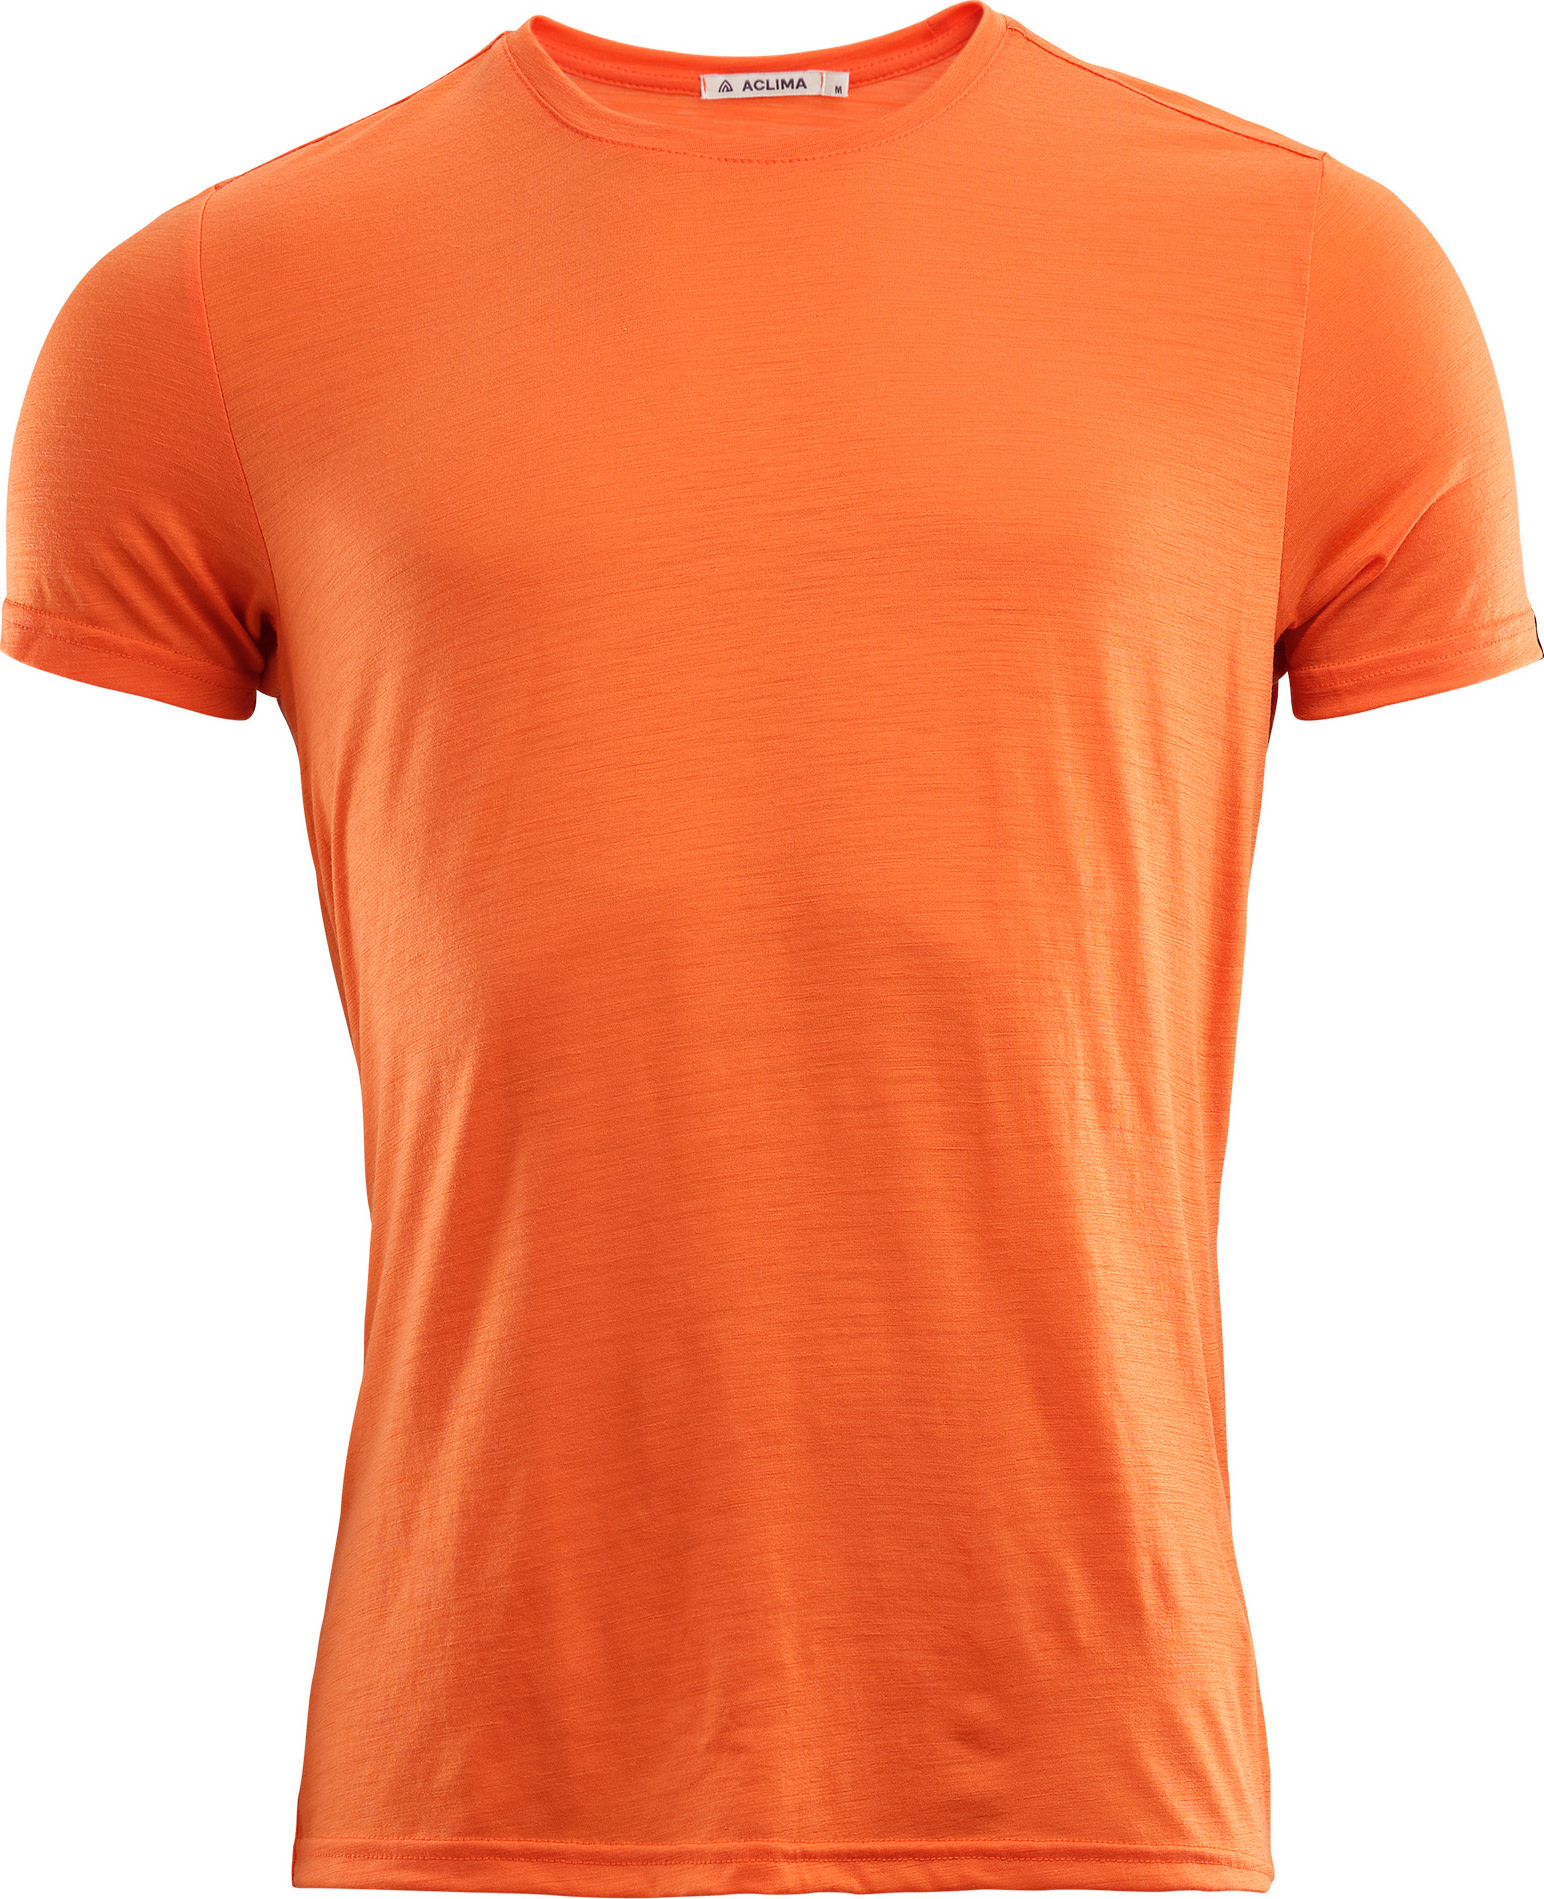 Men’s LightWool T-shirt Round Neck Orange Tiger